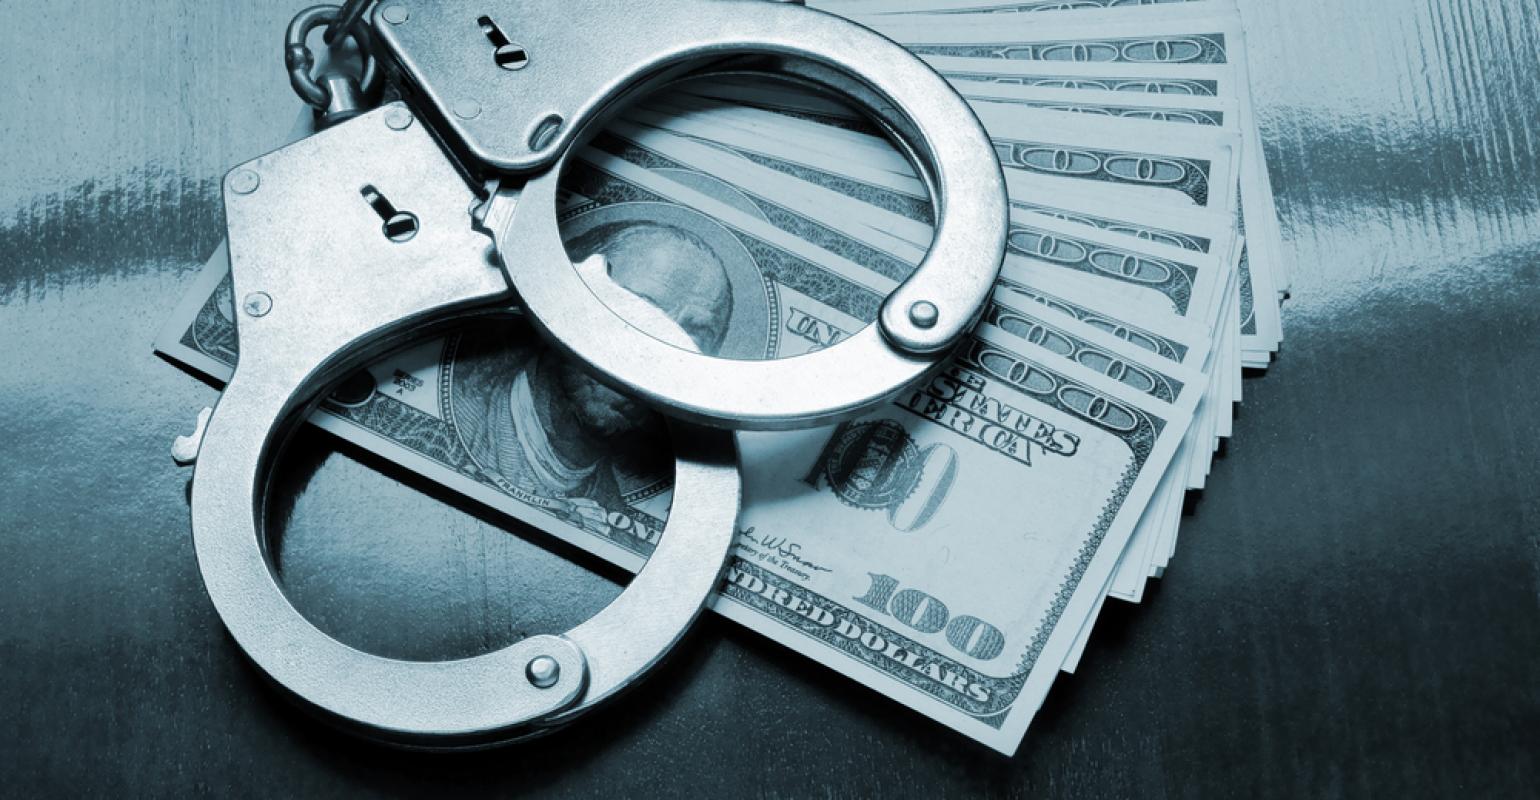 The Mafias Money Laundering